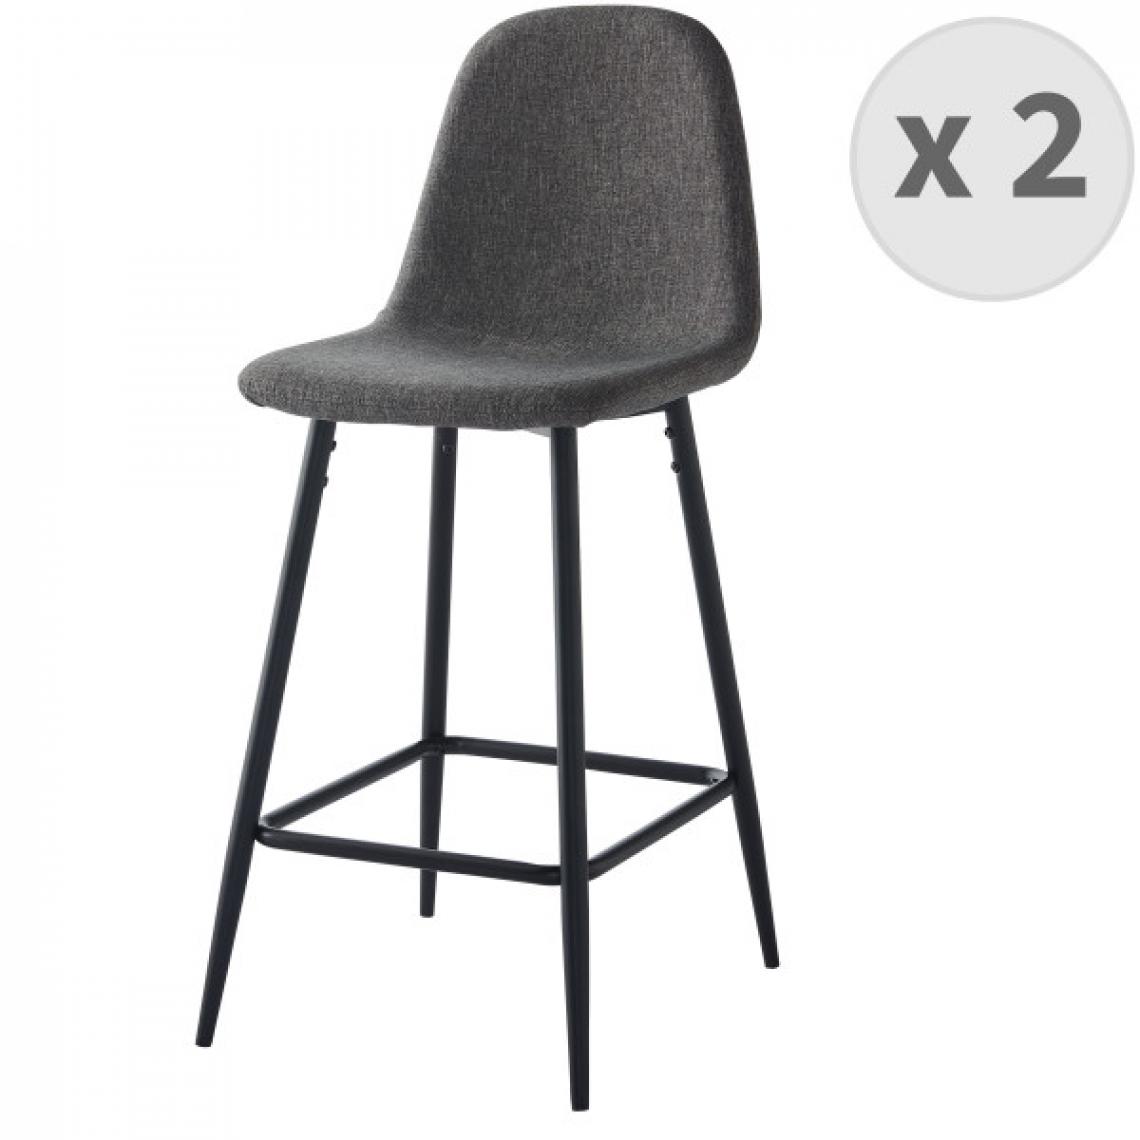 Moloo - MANCHESTER - Chaise de bar scandinave tissu gris anthracite pieds métal noir (x2) - Tabourets